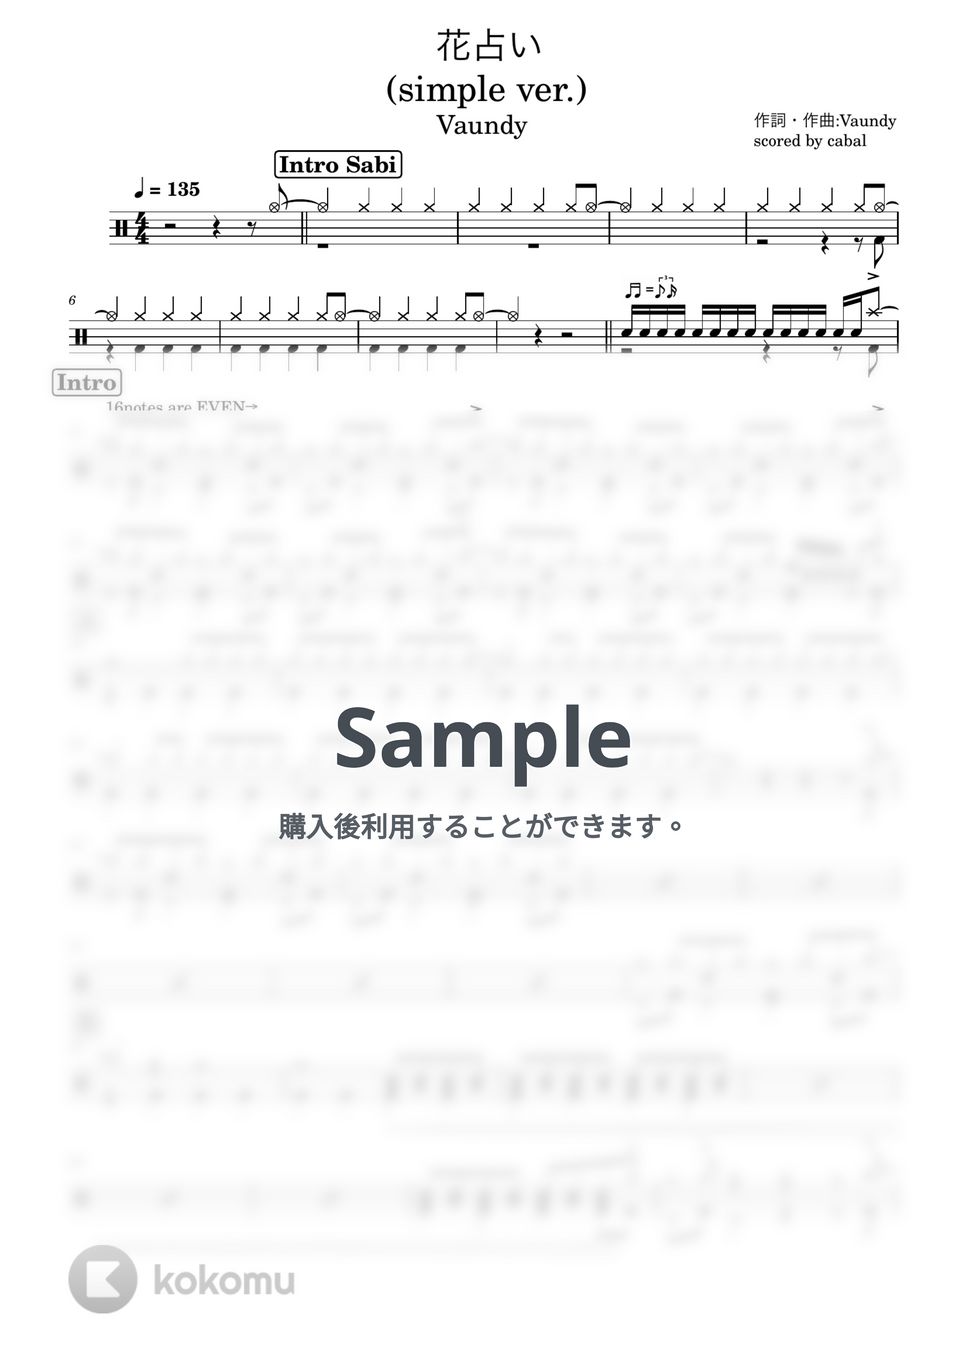 Vaundy - 花占い（simple ver.） (ドラム譜面/初心者向け) by cabal